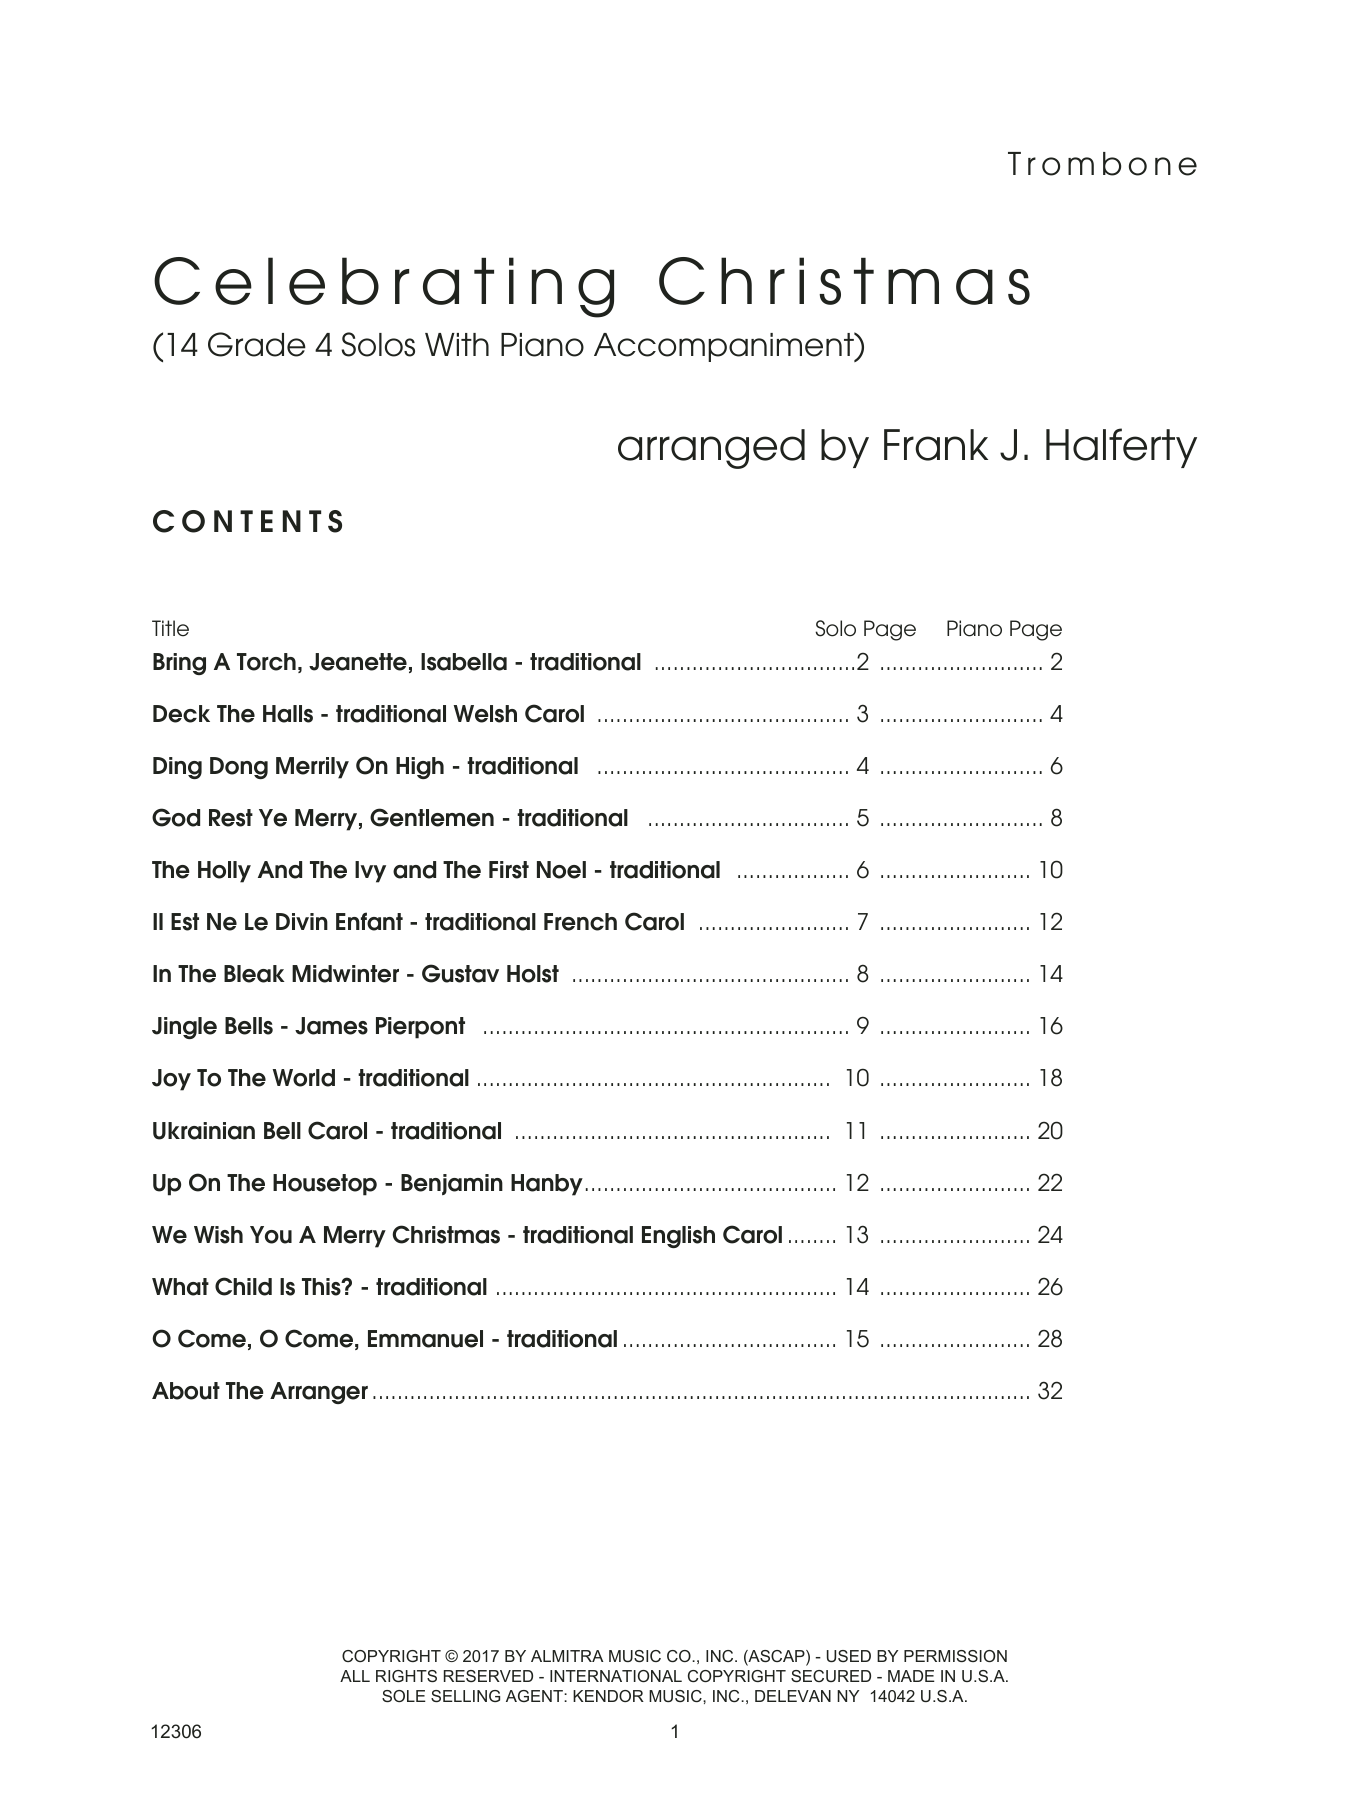 Celebrating Christmas (14 Grade 4 Solos With Piano Accompaniment) - Trombone (Brass Solo) von Frank J. Halferty